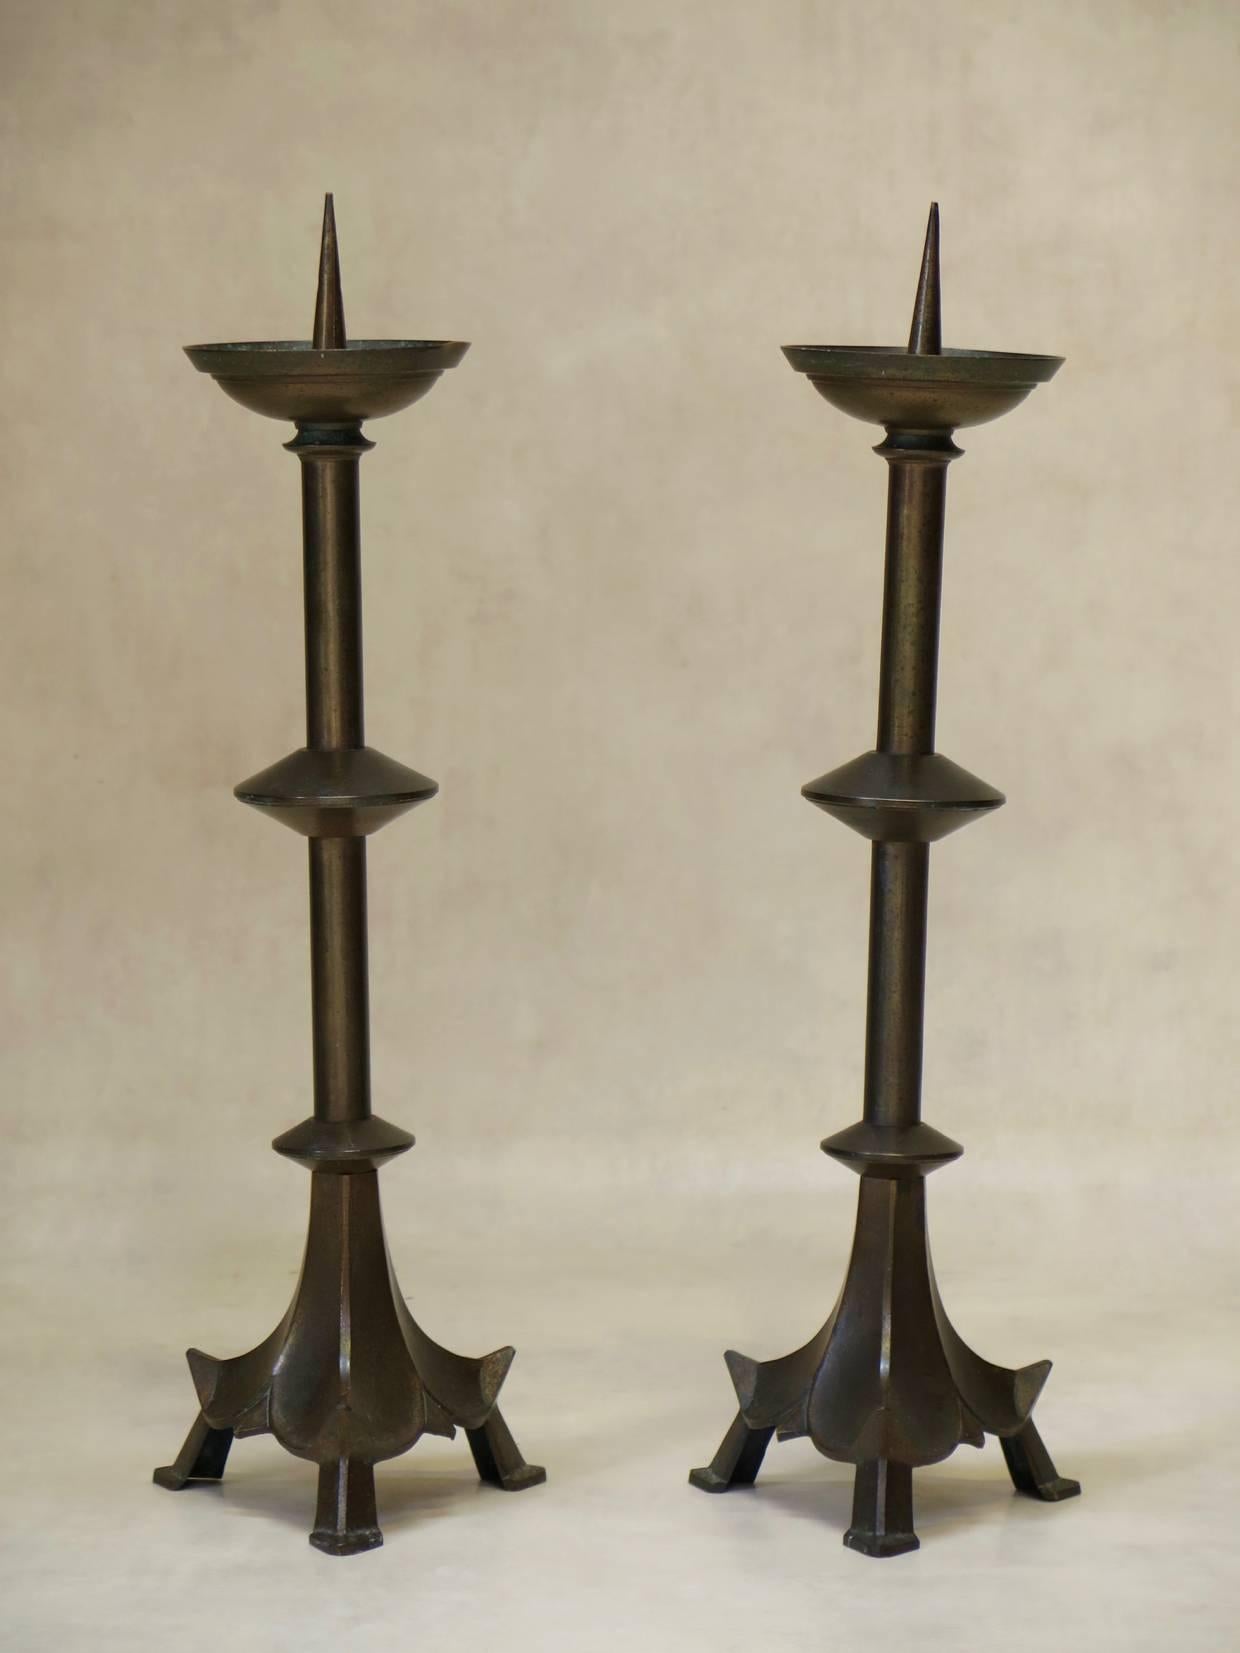 Pair of brass candlesticks of elegant design, raised on tripod bases.